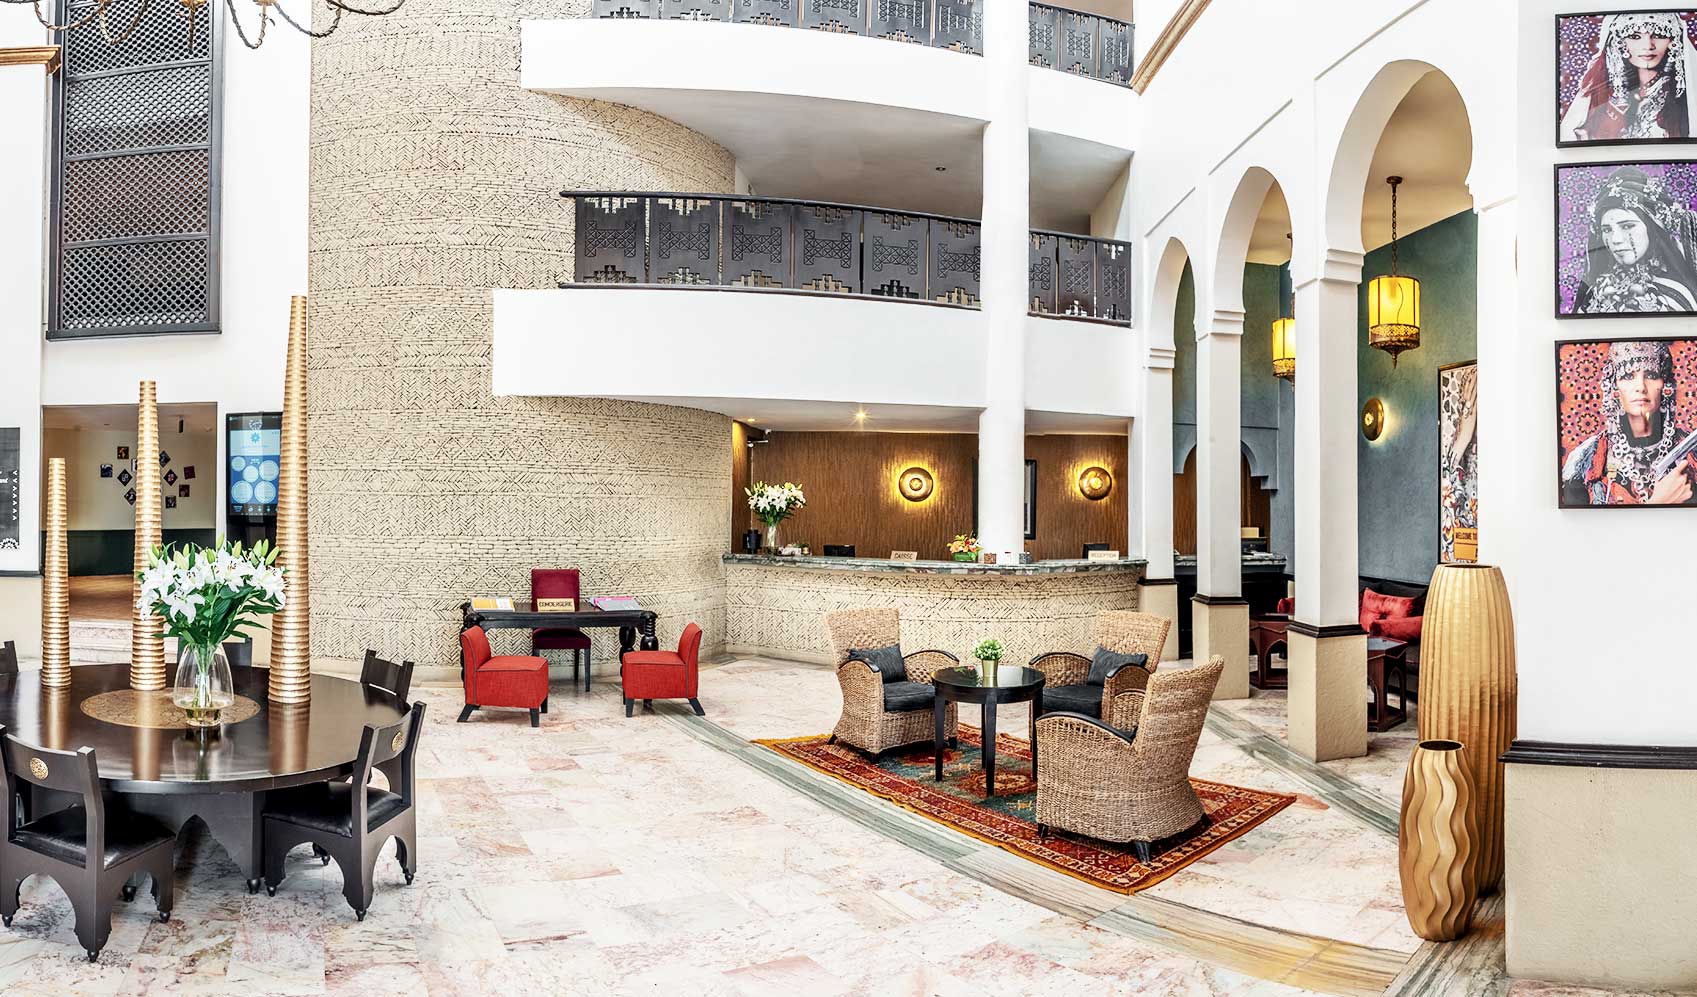 Maroc - Agadir - Odyssee Park Hôtel 4*